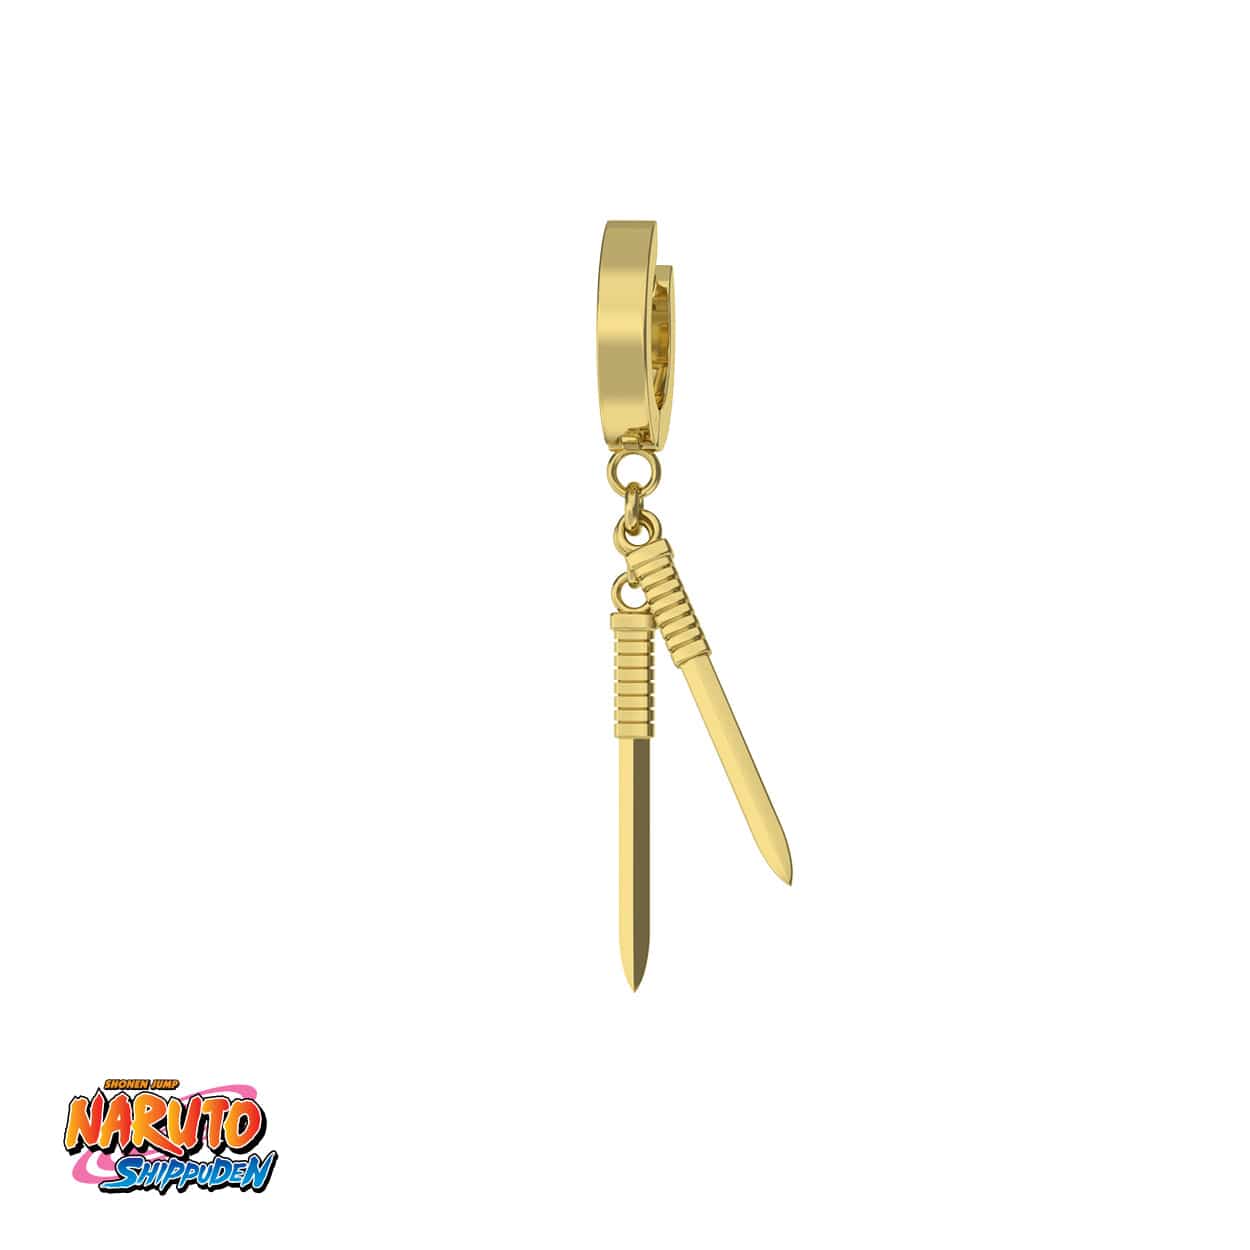 Naruto™ Killer Bee Sword Earring